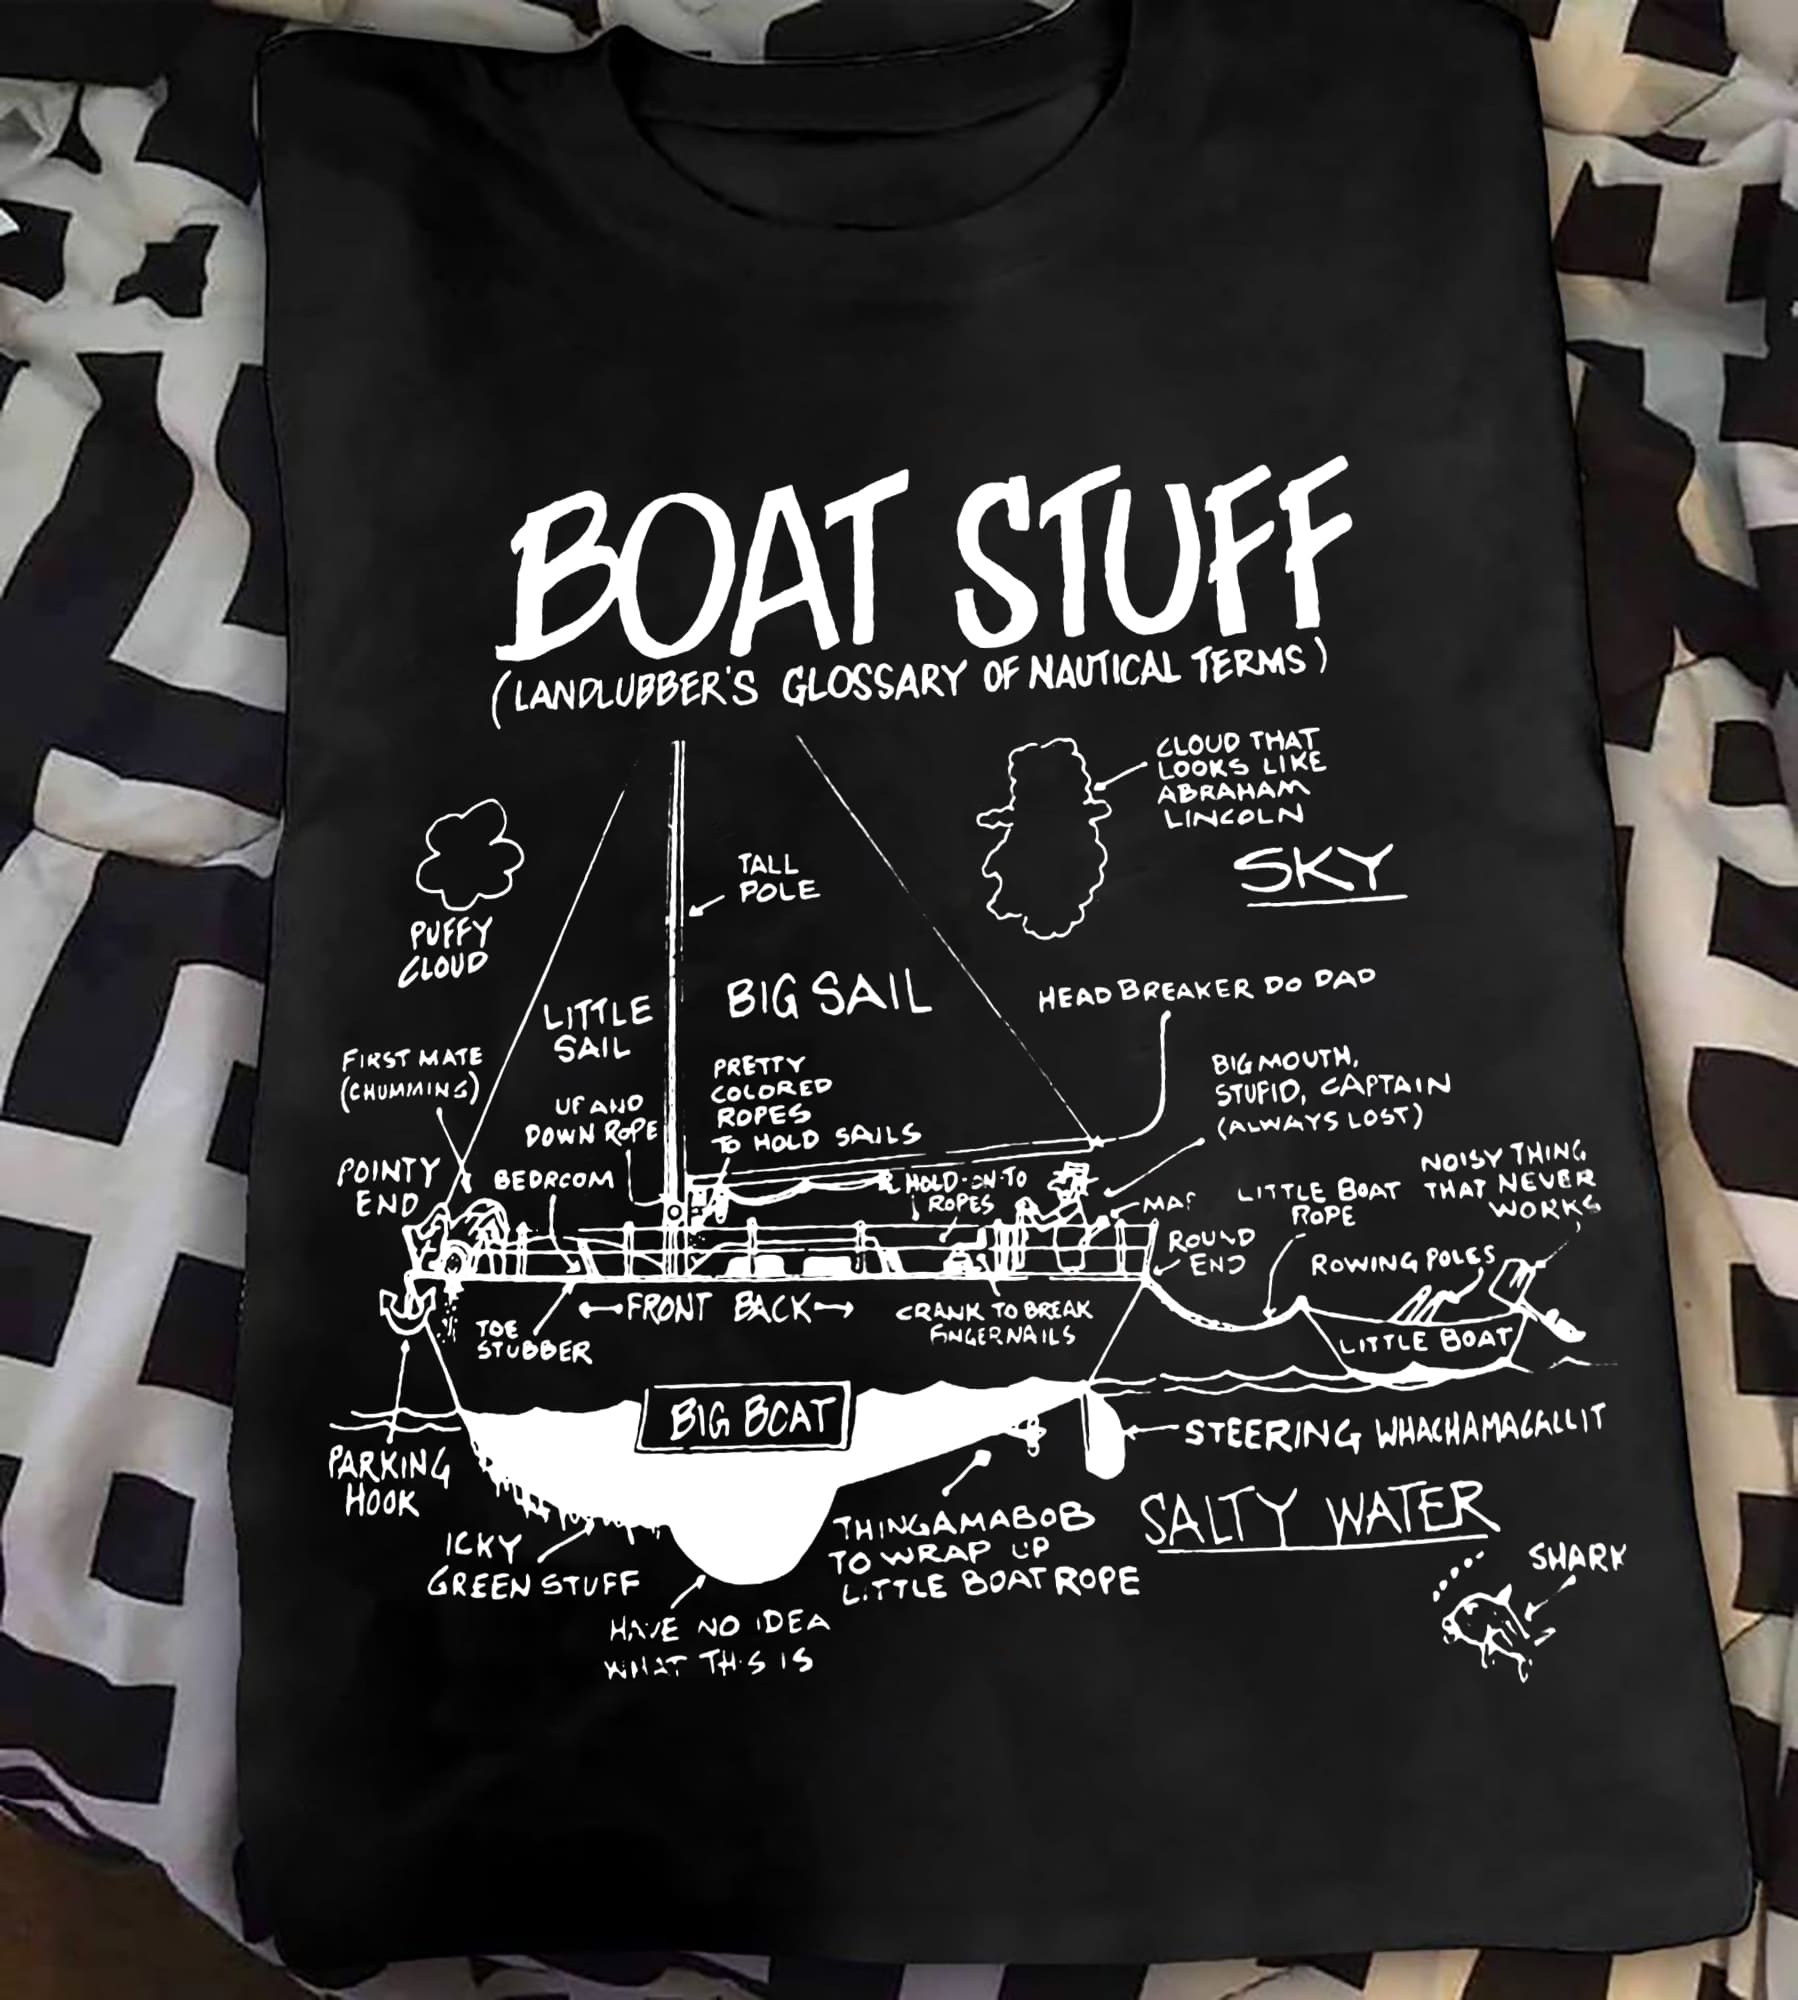 Boat stuff – Landlubber's glossary of nautical terms, puffy cloud